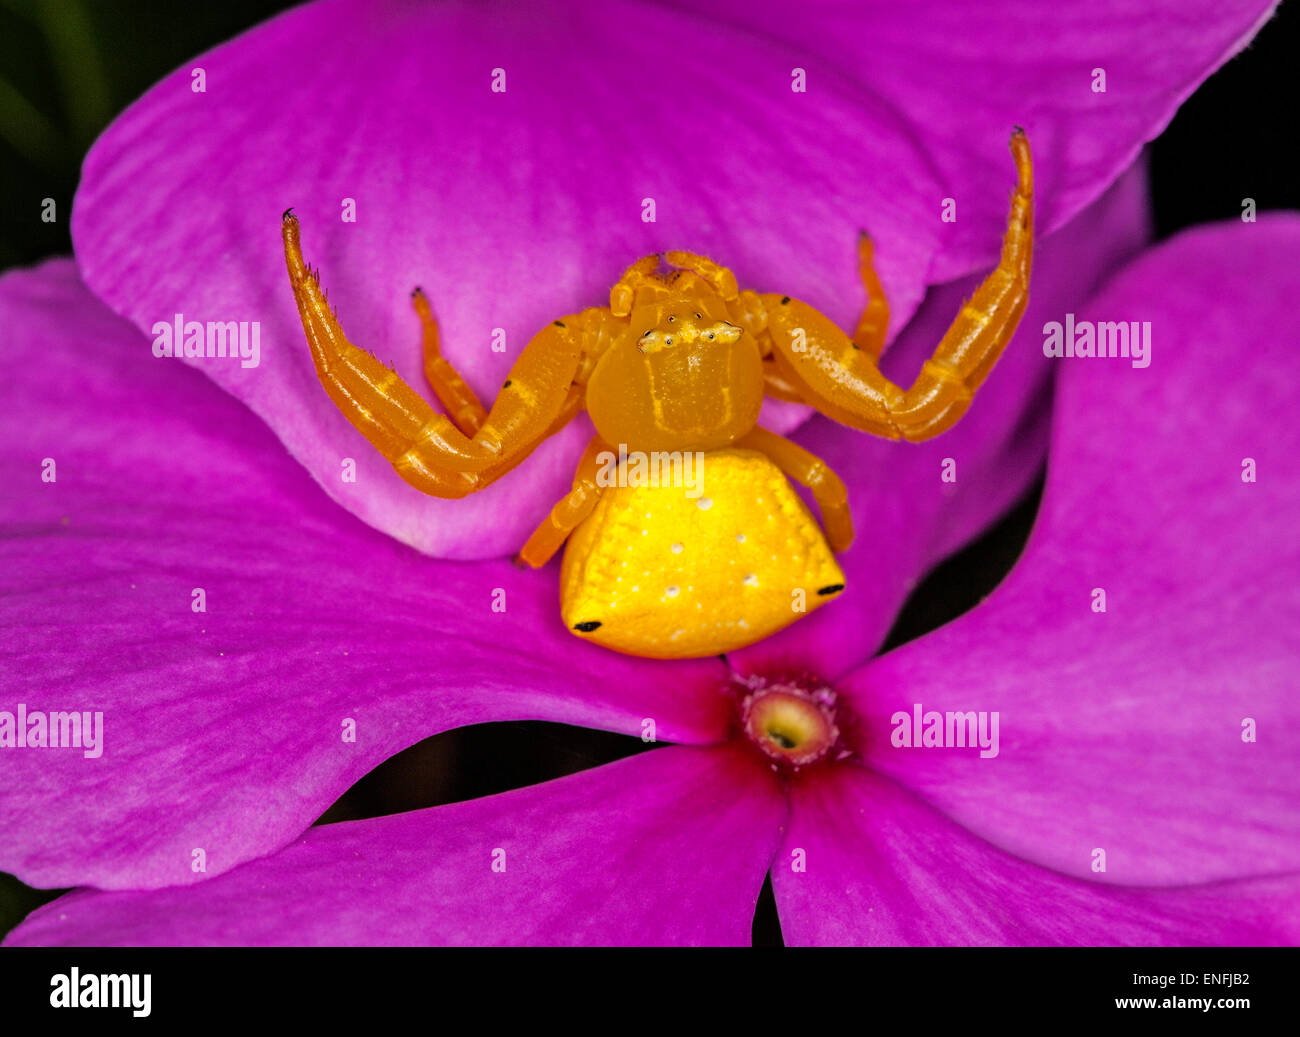 Close-up of bright yellow Australian flower / crab spider Thomisus spectabilis on magenta petals of Vinca flower Stock Photo